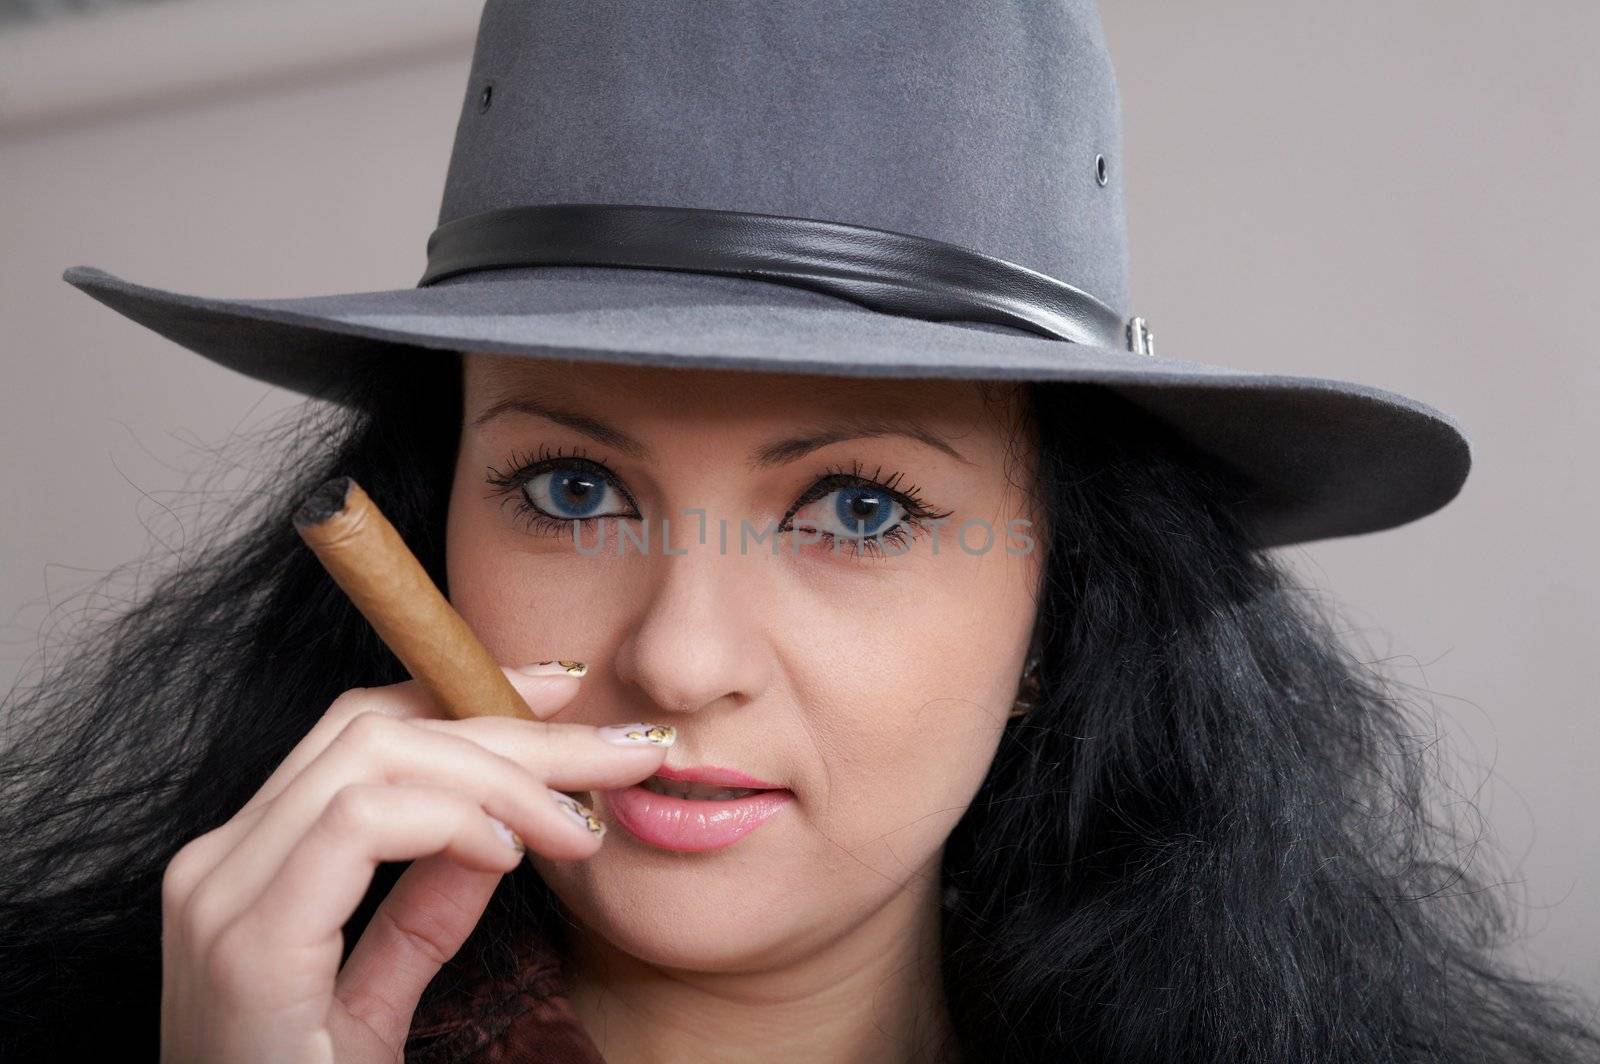 Girl with cigar by velkol